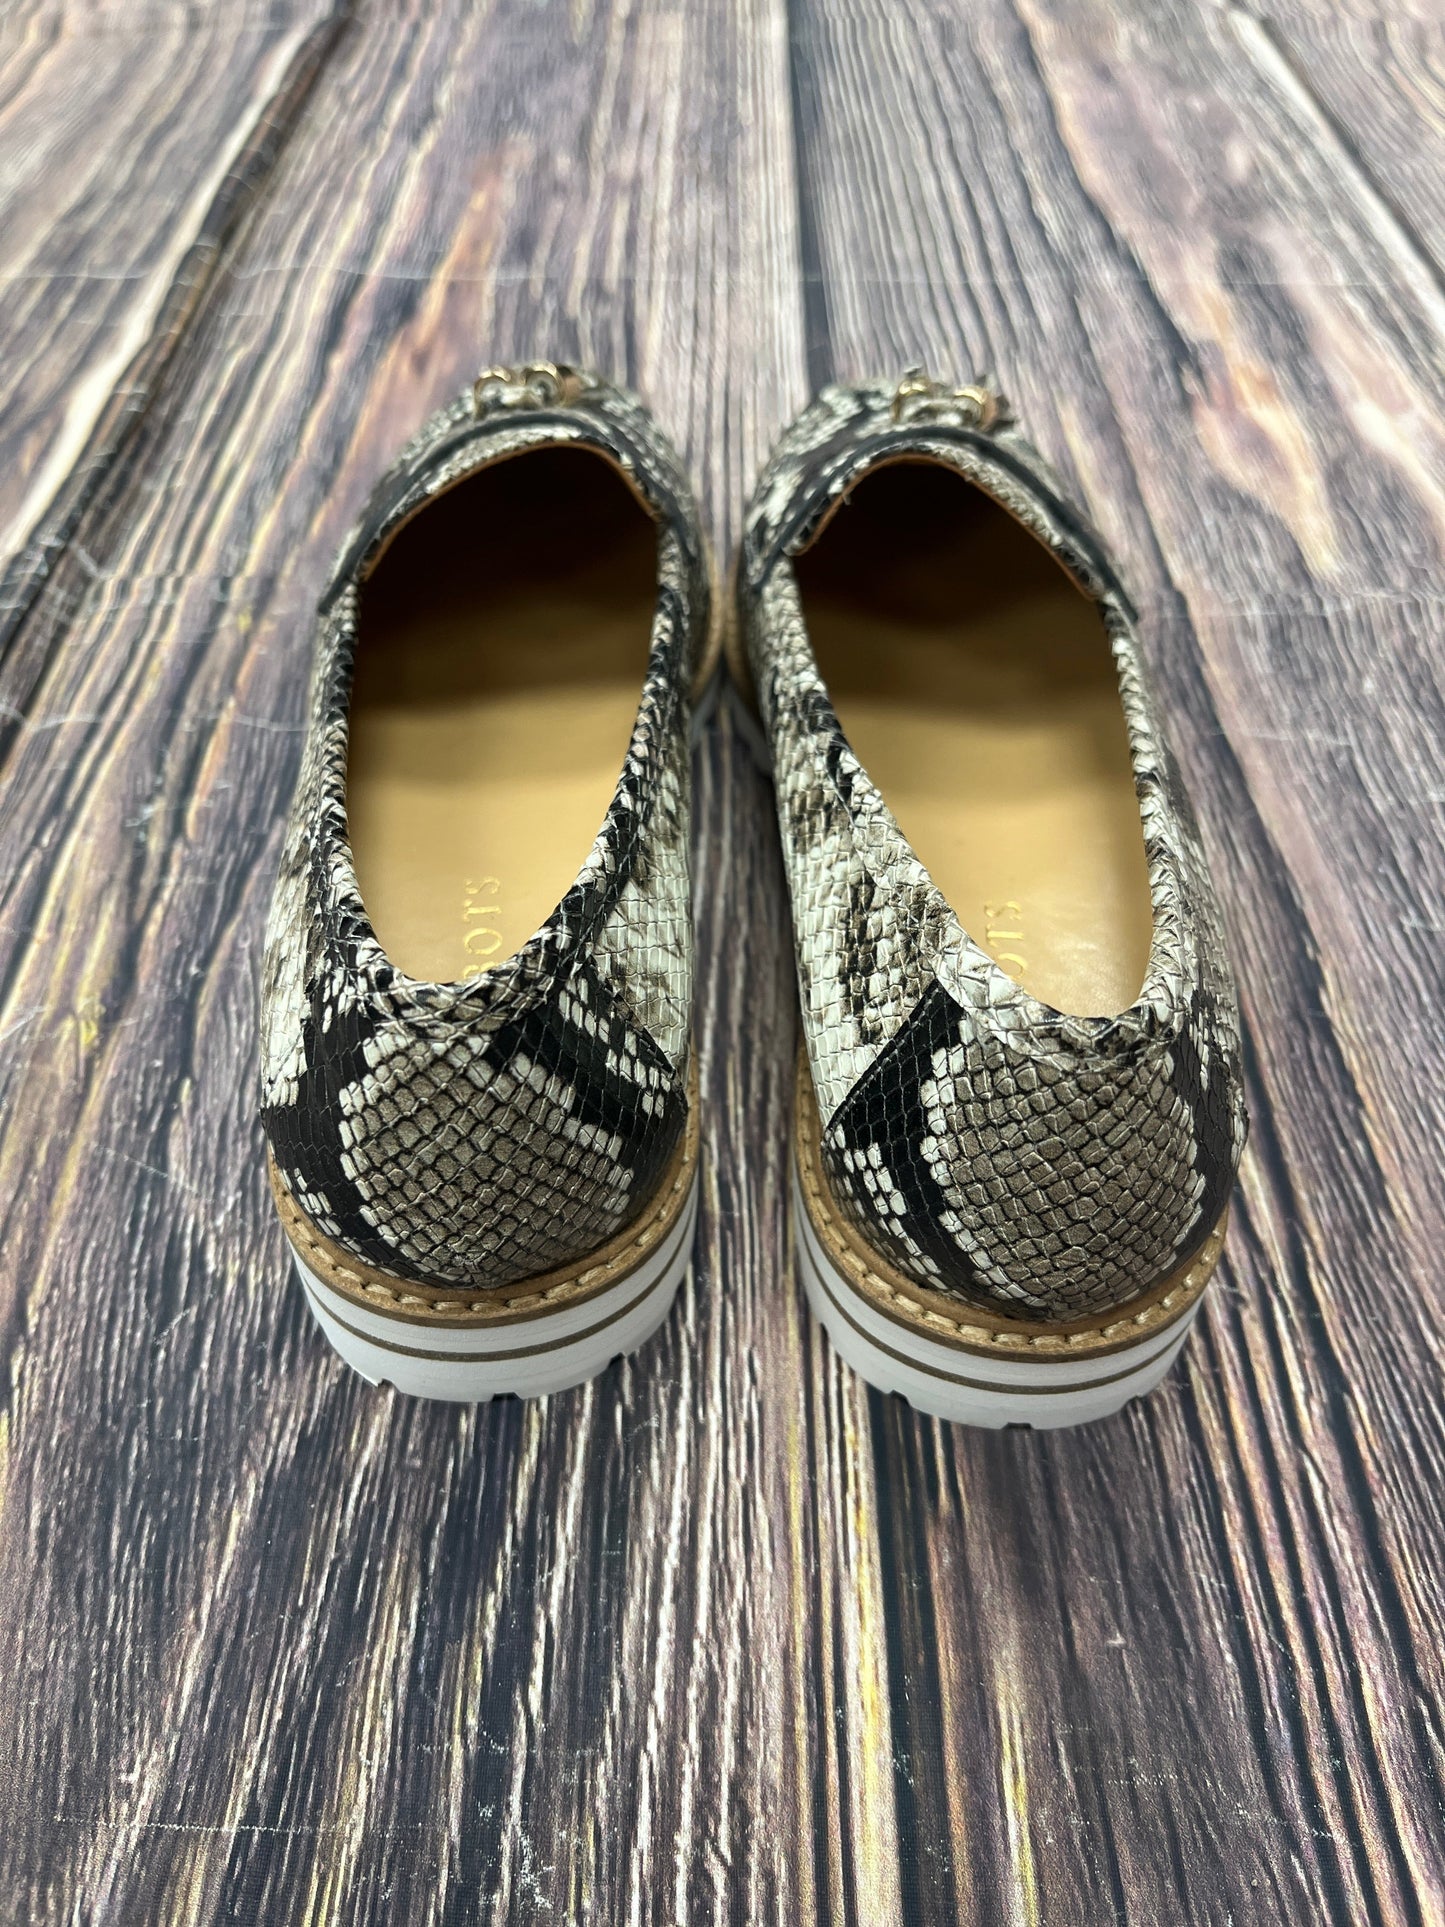 Snakeskin Print Shoes Flats Talbots, Size 7